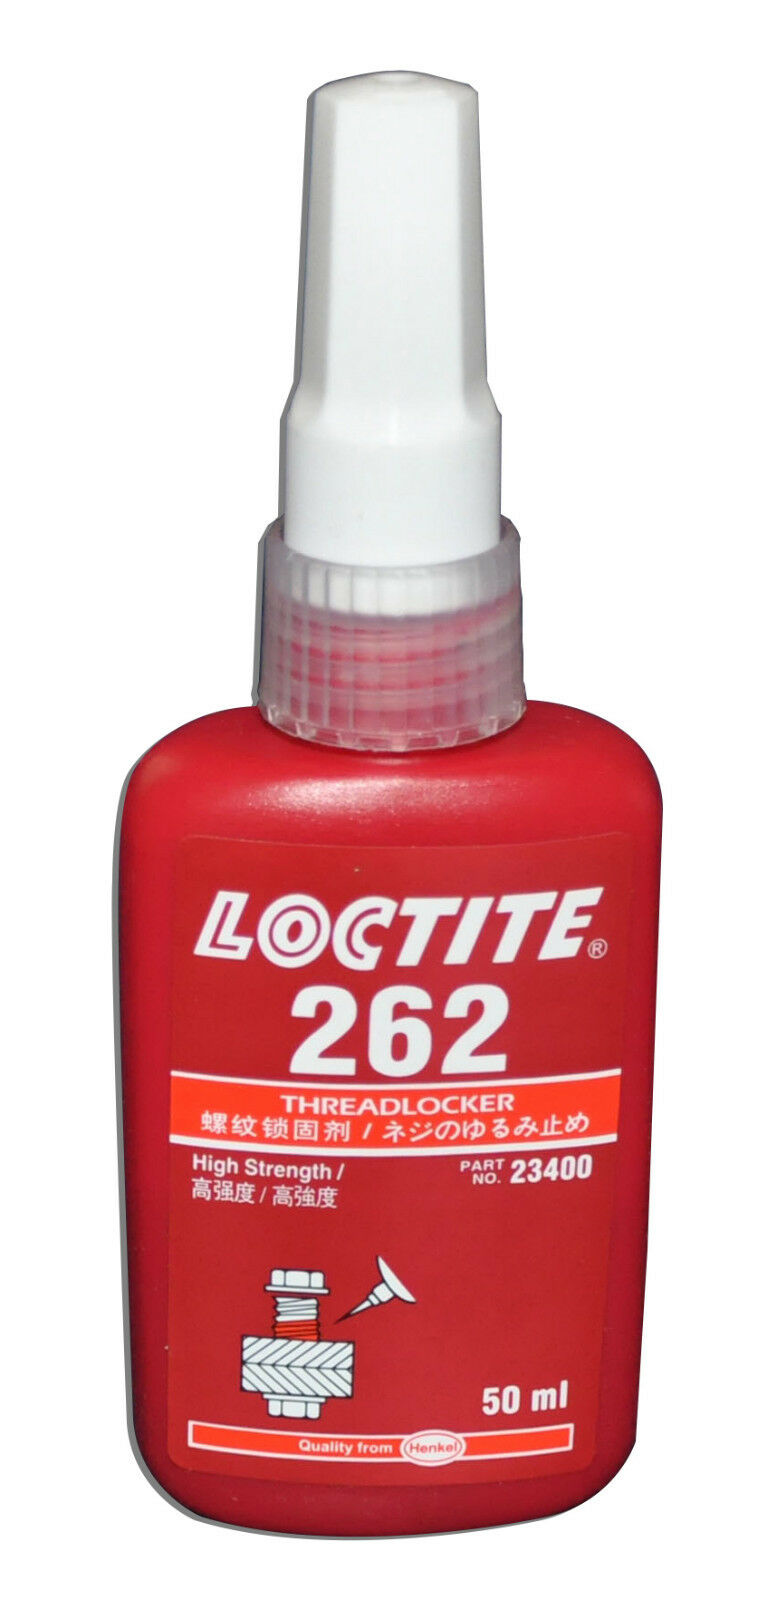 Loctite 262 High Strength Threadlocker High Strength Liquid - 50 Ml